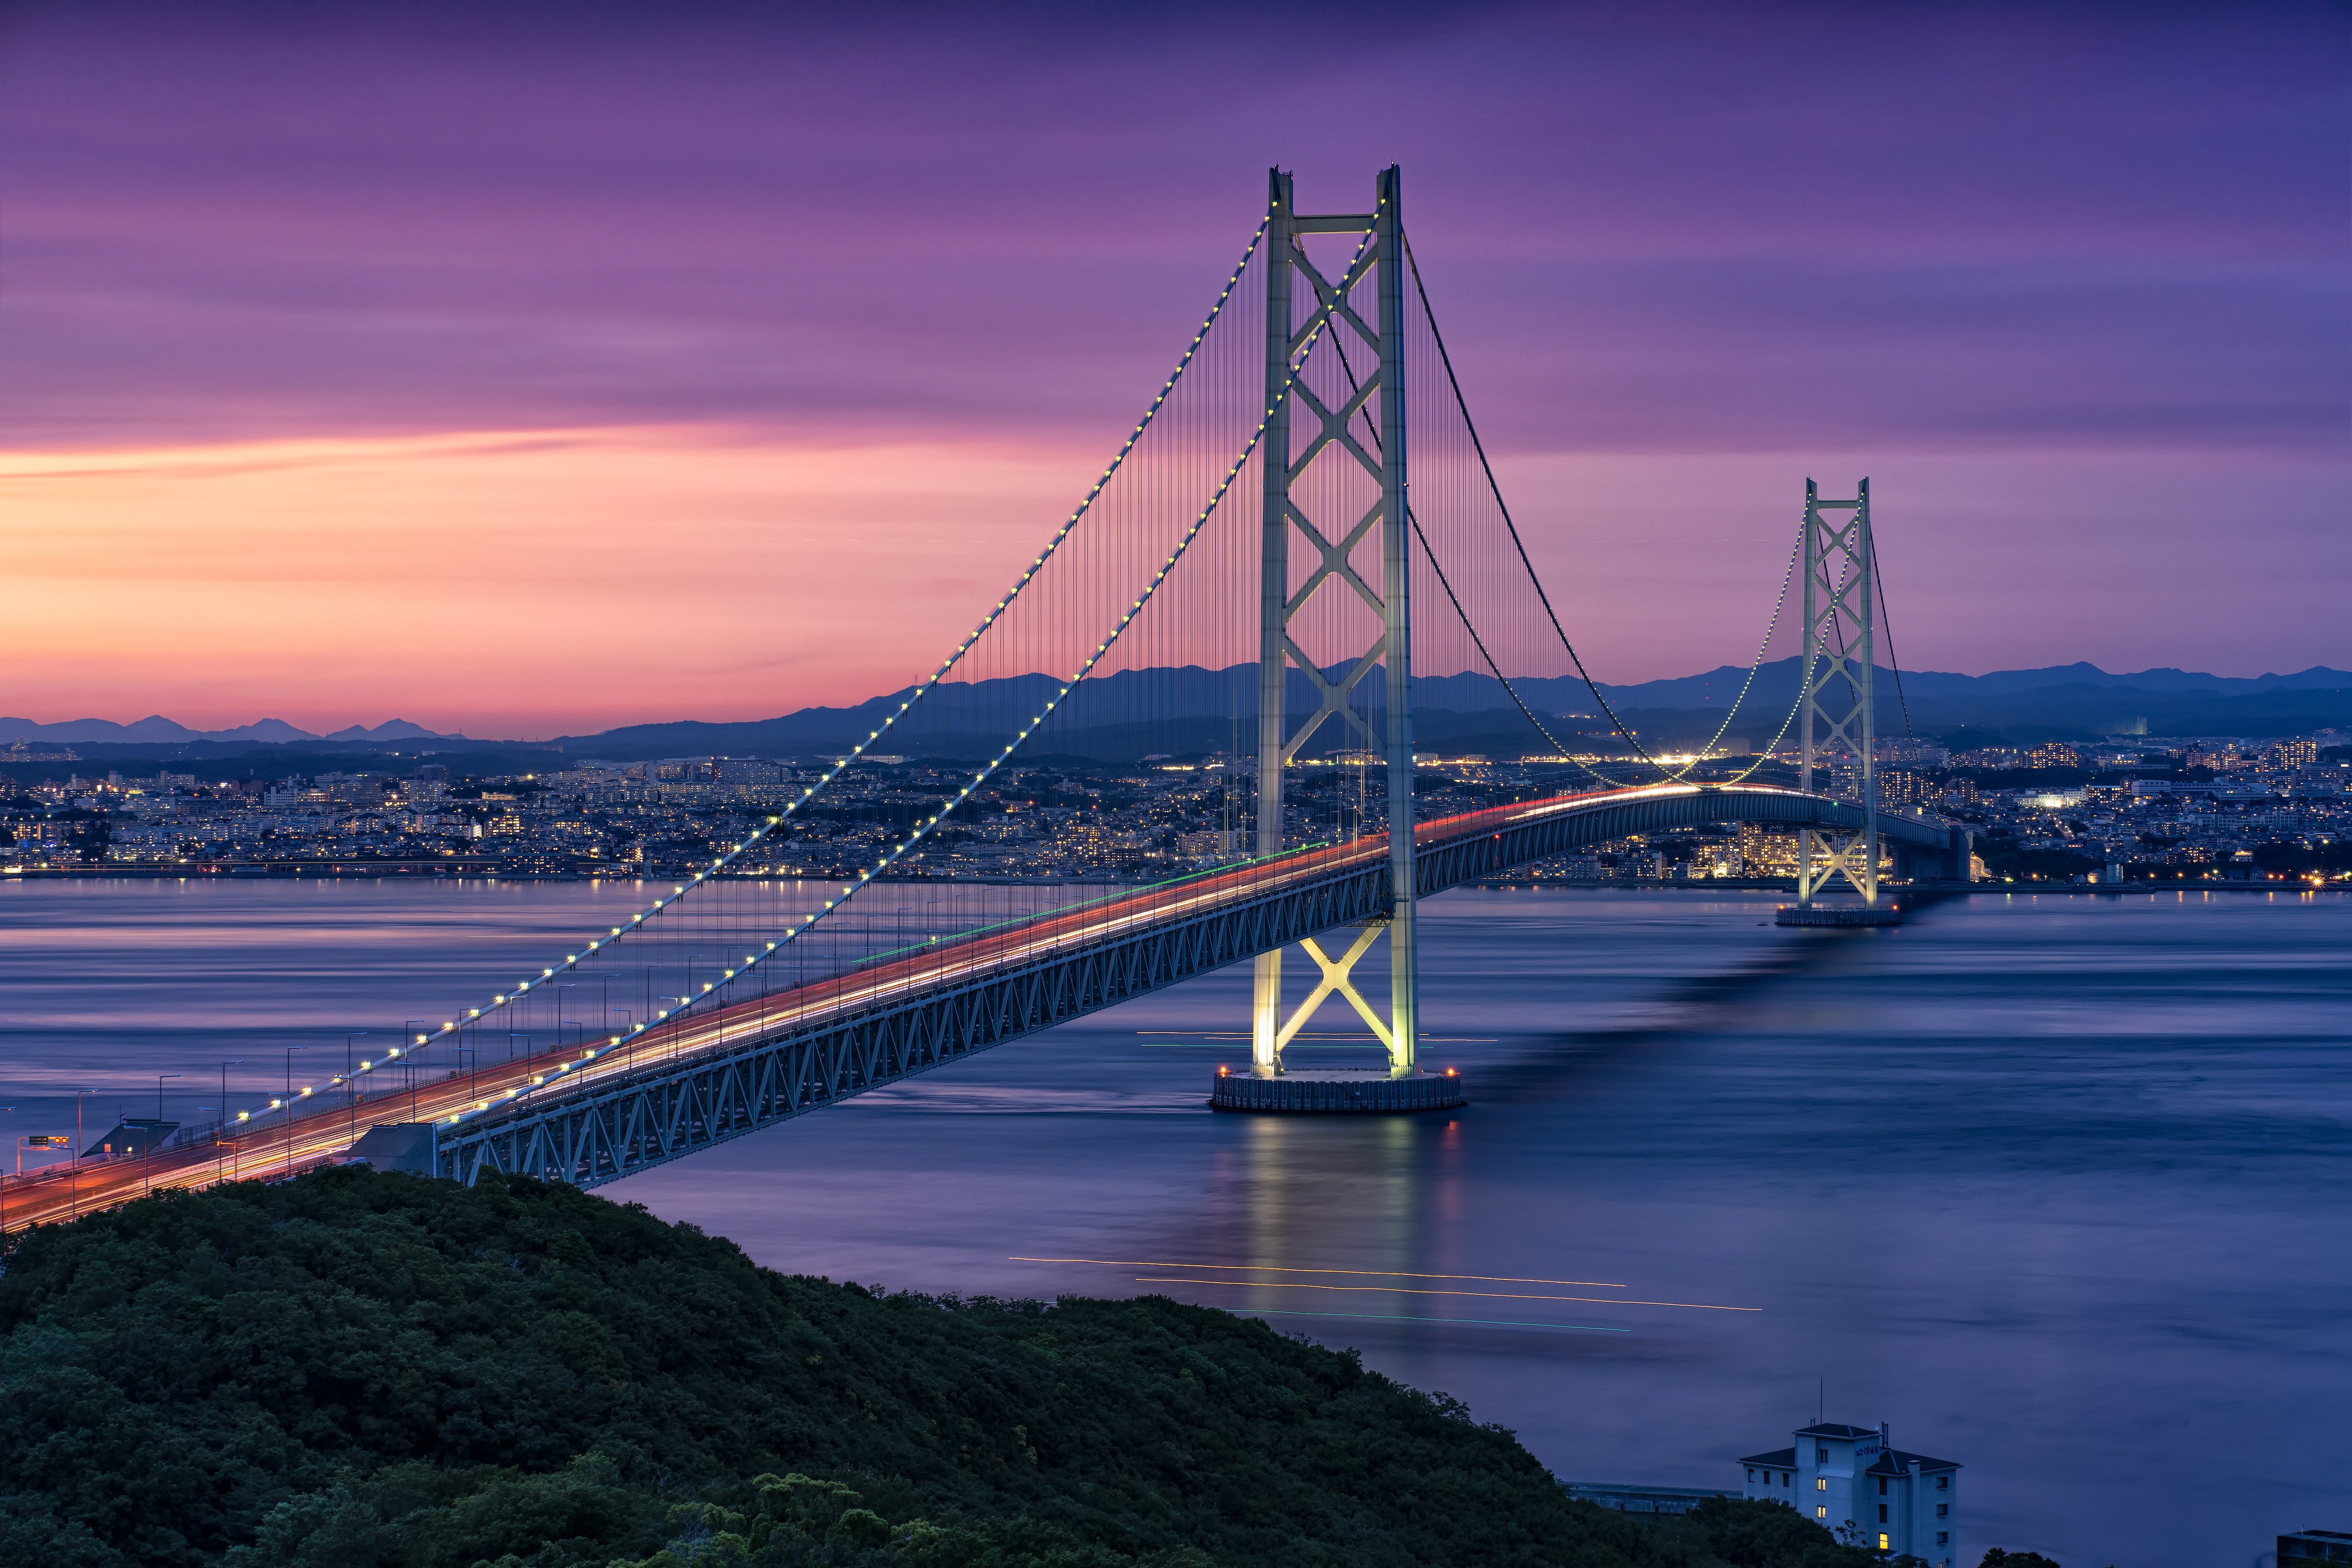 Мост акаси в Японии